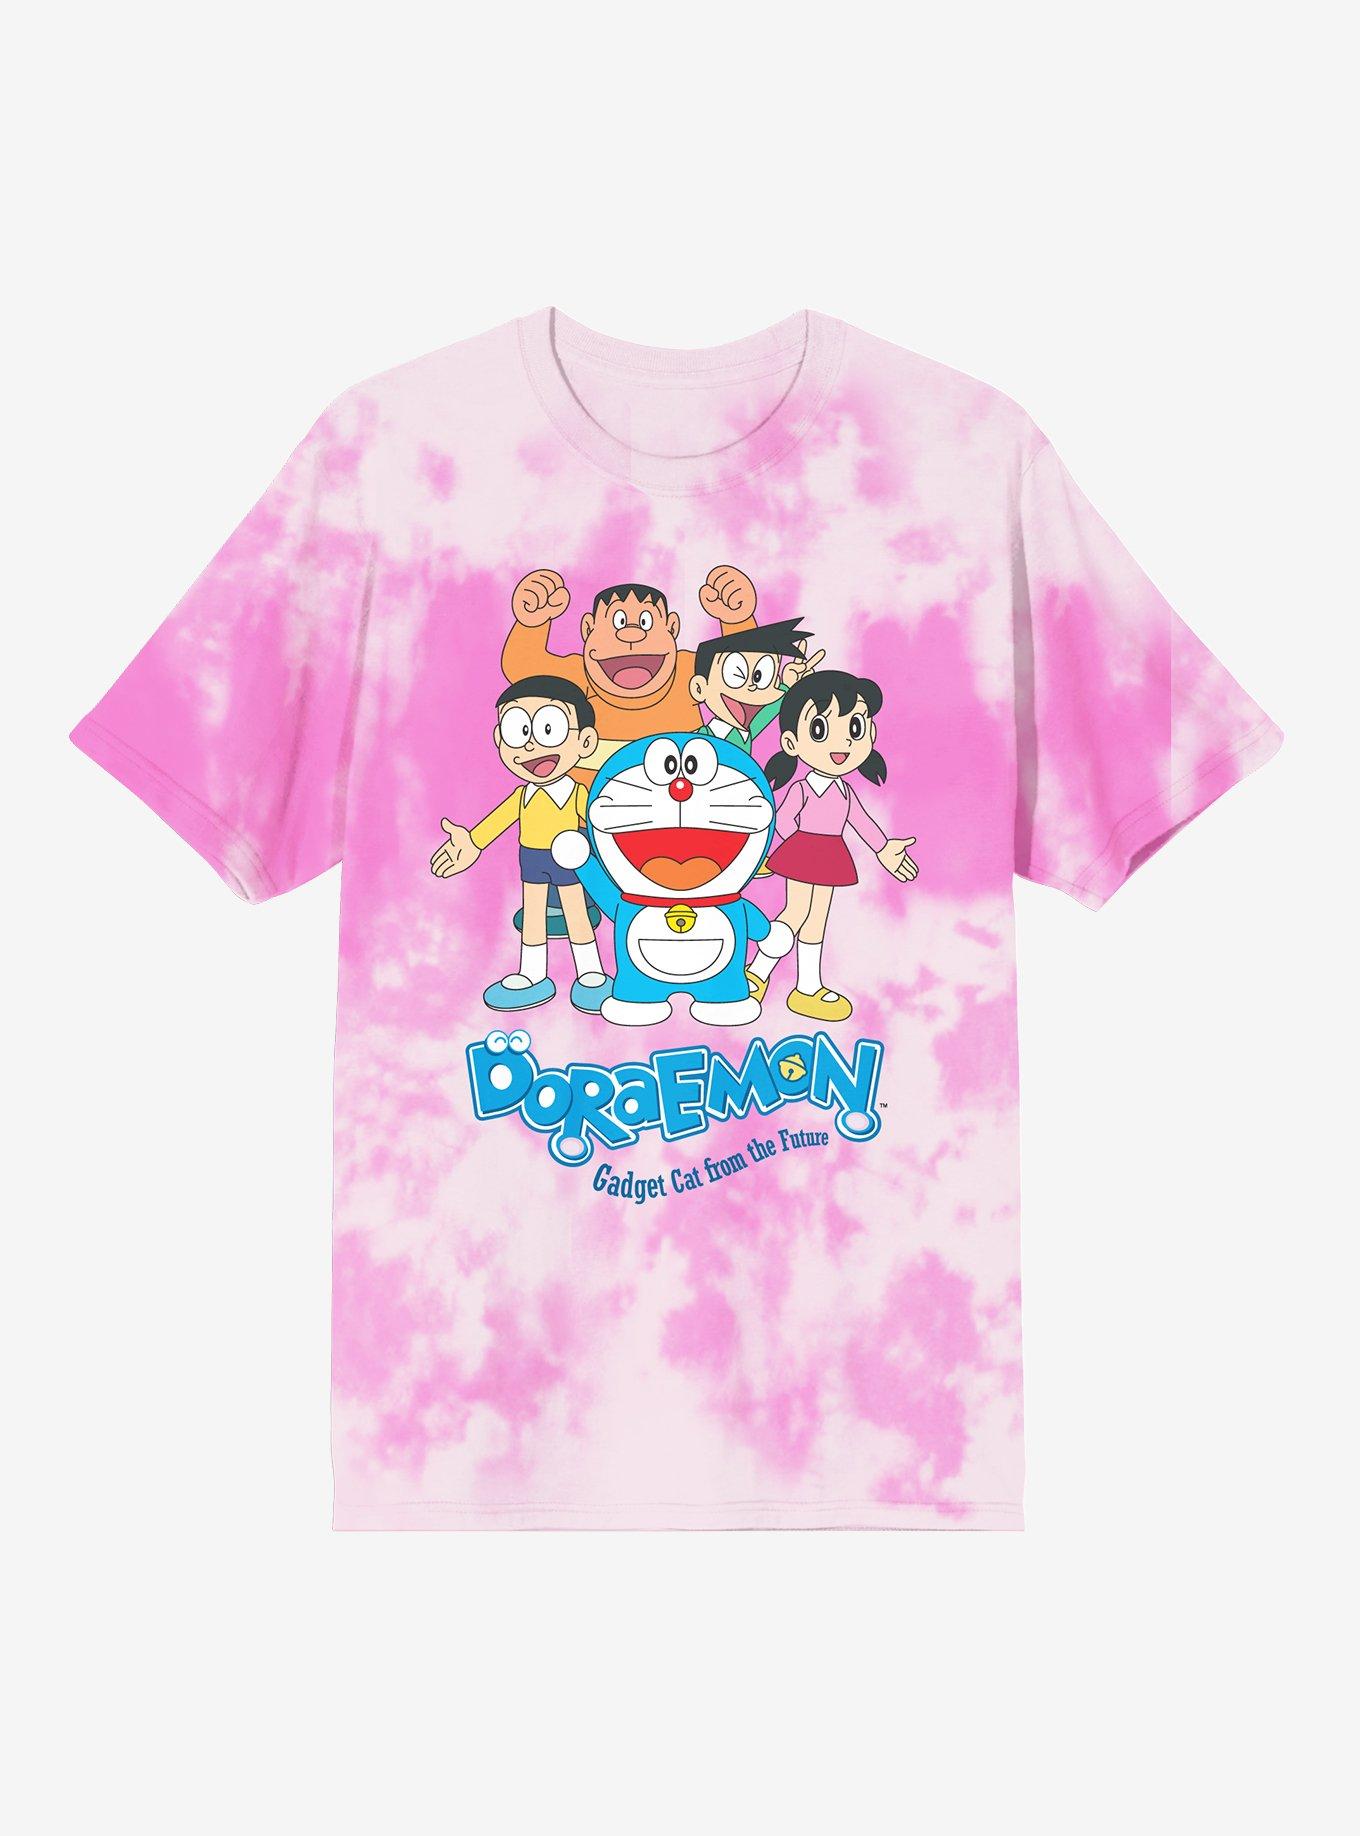 Doraemon Group Pink Tie-Dye T-Shirt